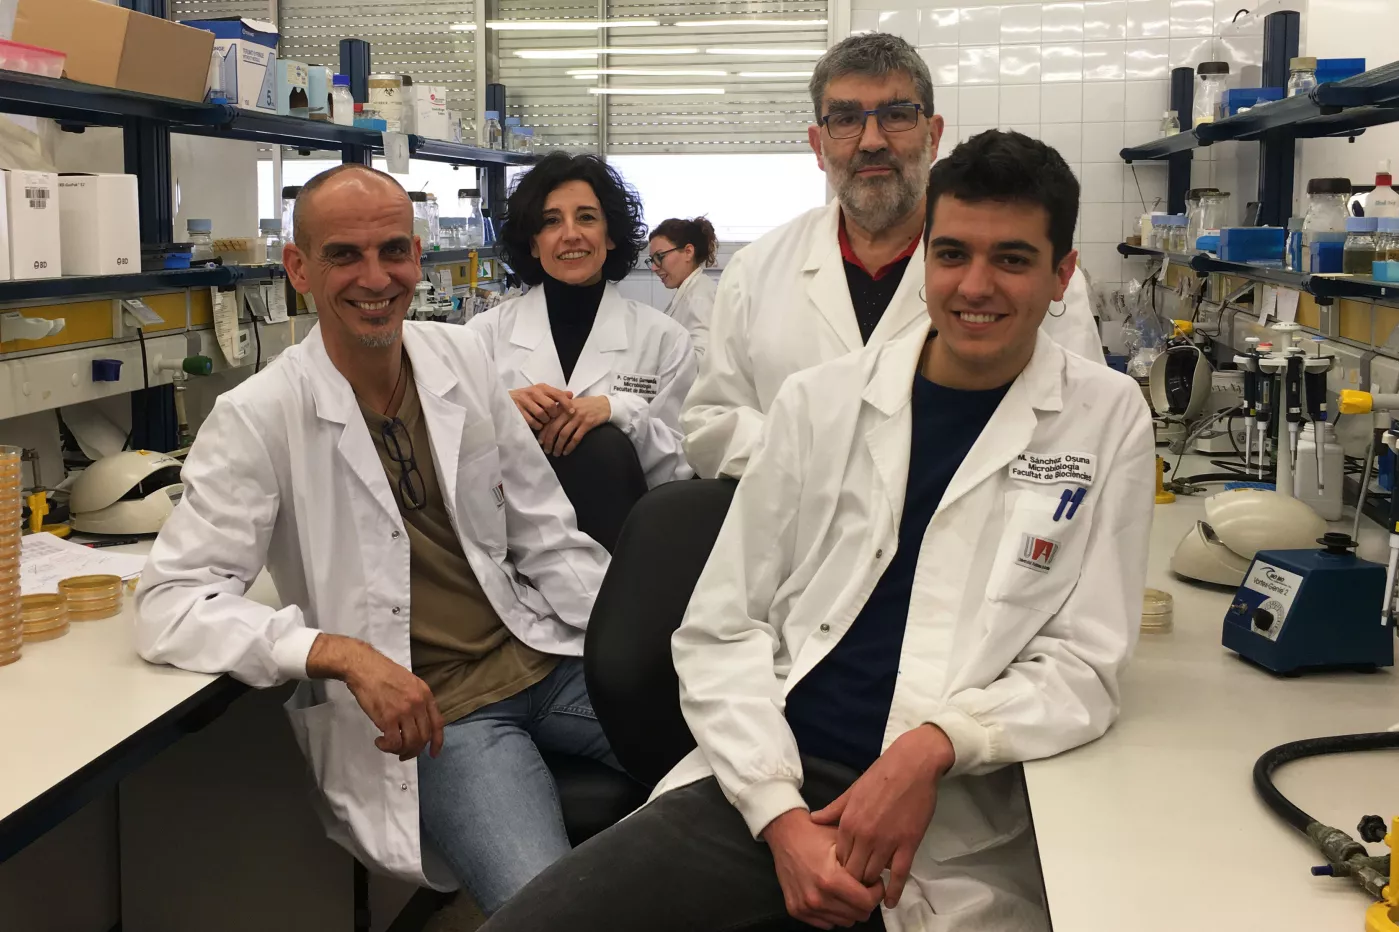 El equipo de investigadores que ha realizado el estudio: Ivan Erill, Pilar Cortés, Jordi Barbé y Miquel Sánchez-Osuna.